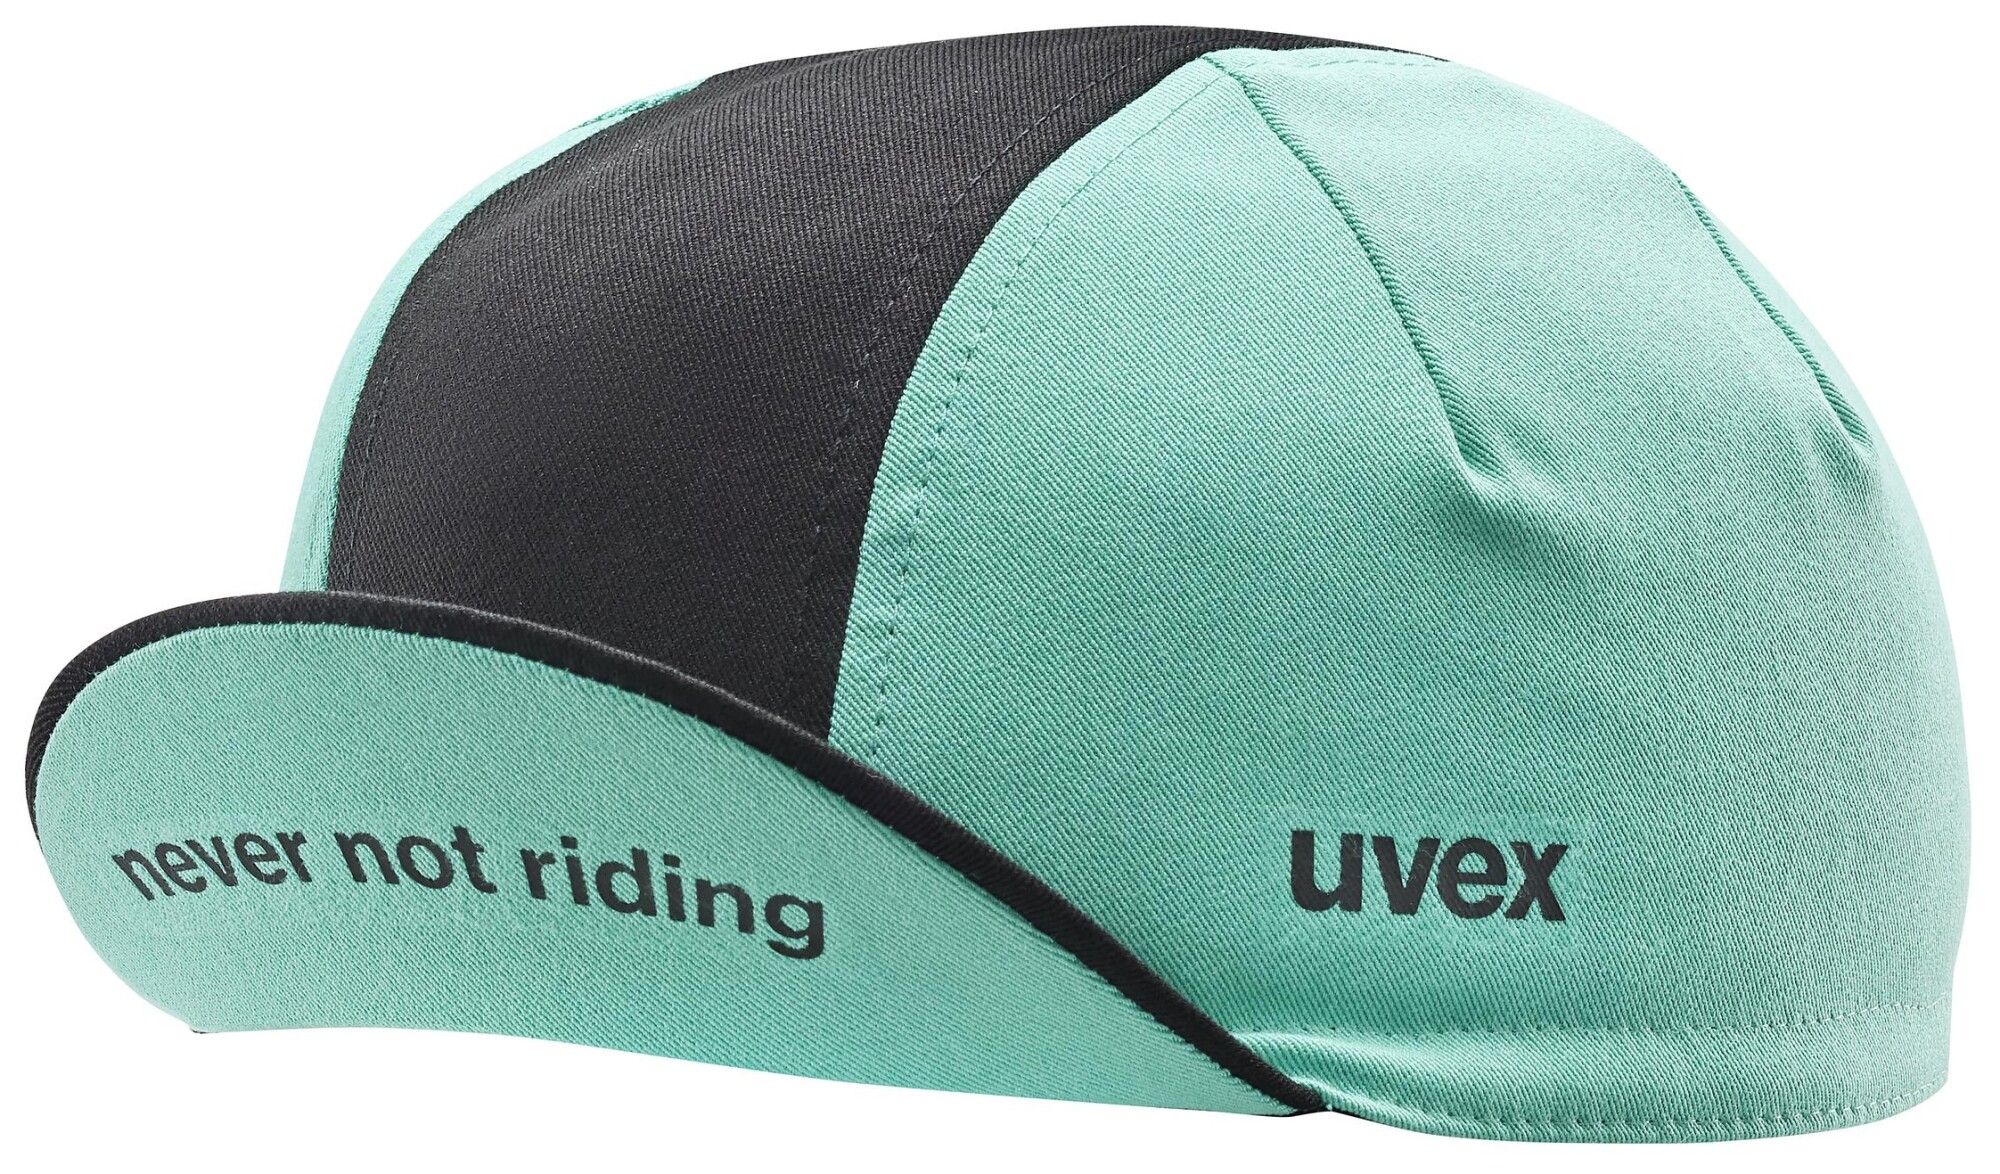 Bild von Fahrrad XXL uvex cycling cap